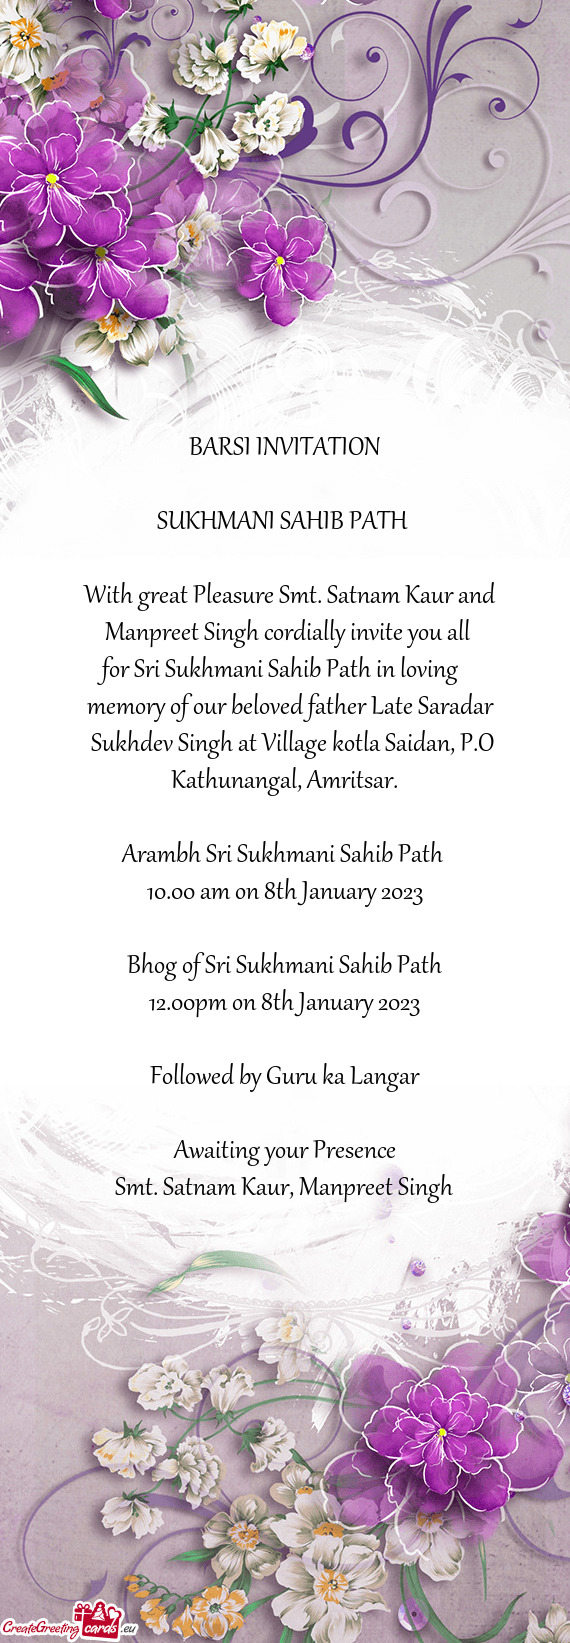 With great Pleasure Smt. Satnam Kaur and